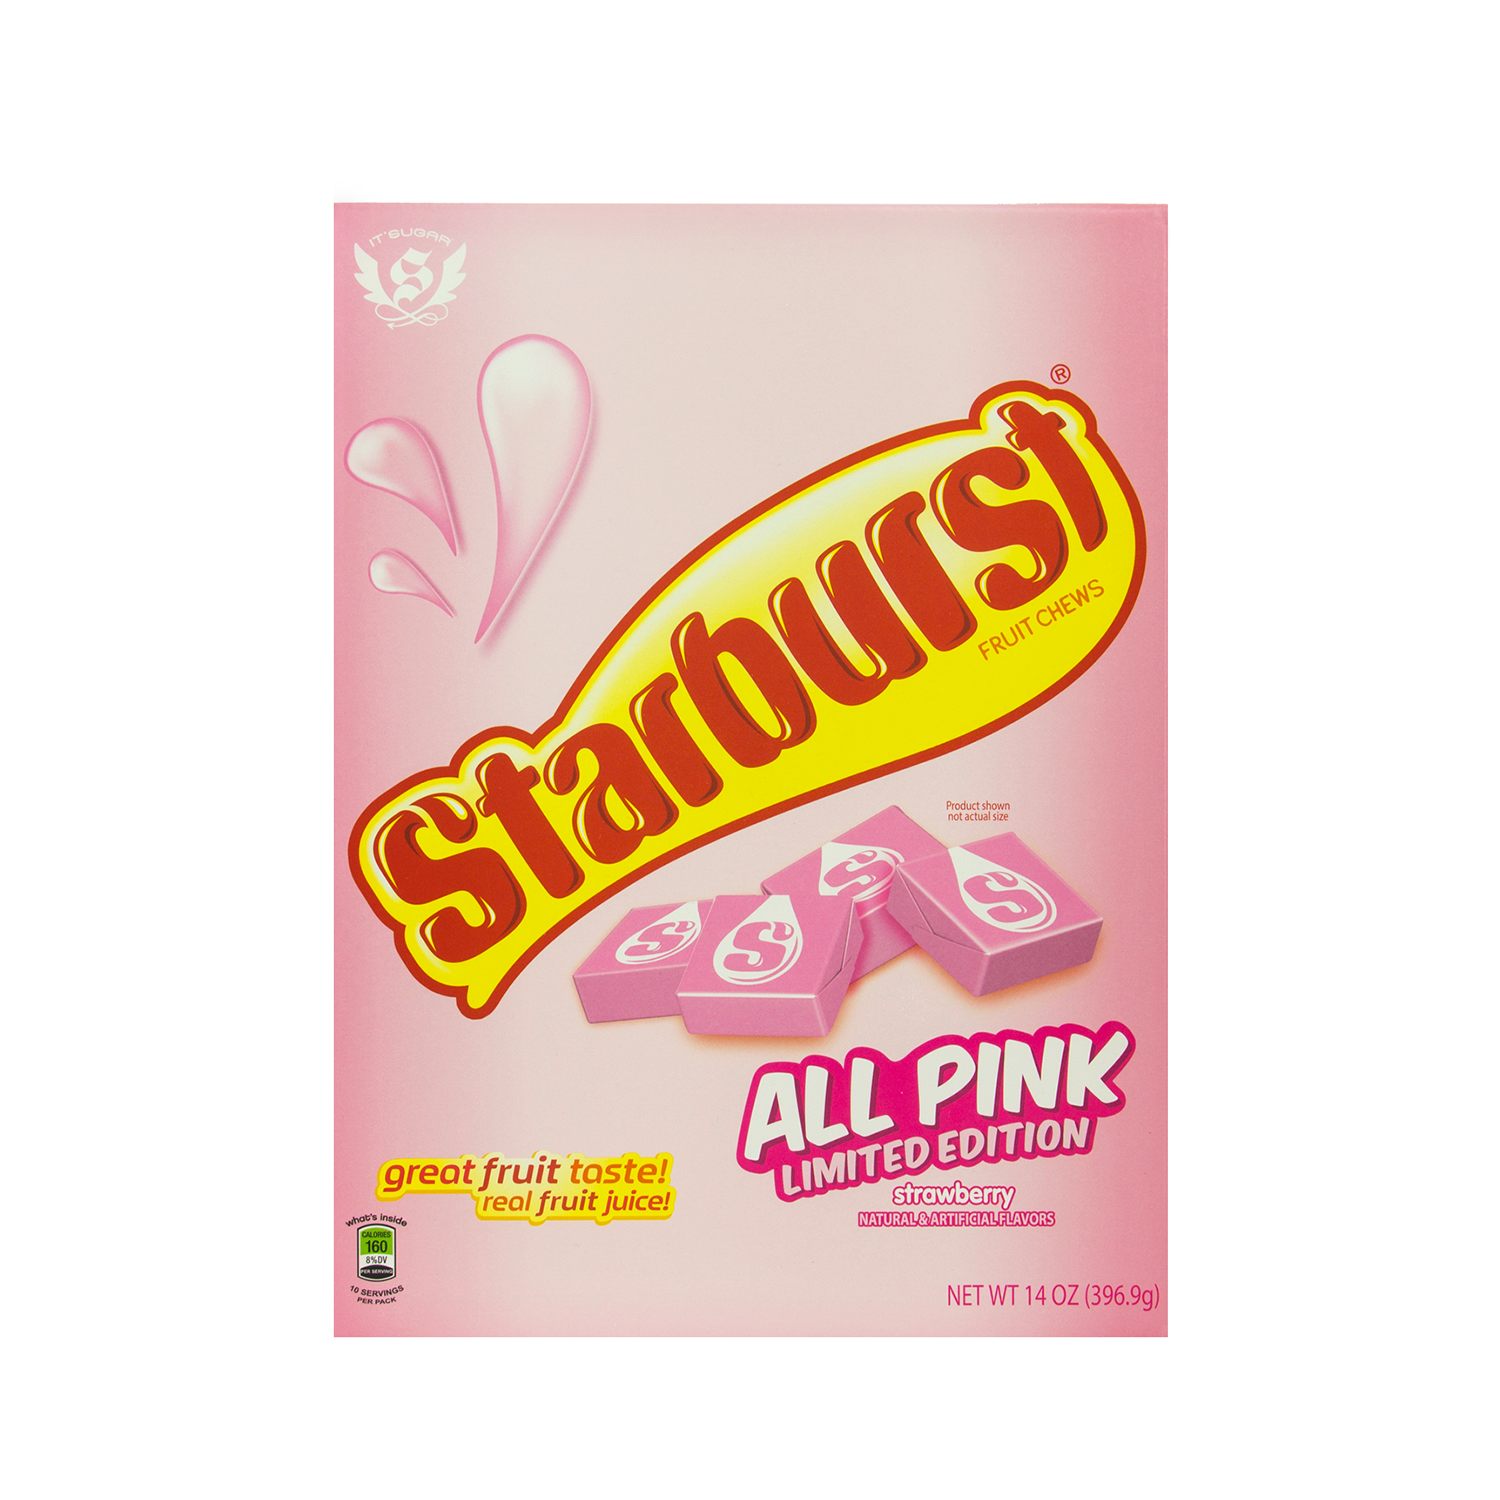 Starburst "ALL PINK" Big Box-Exotic Pop